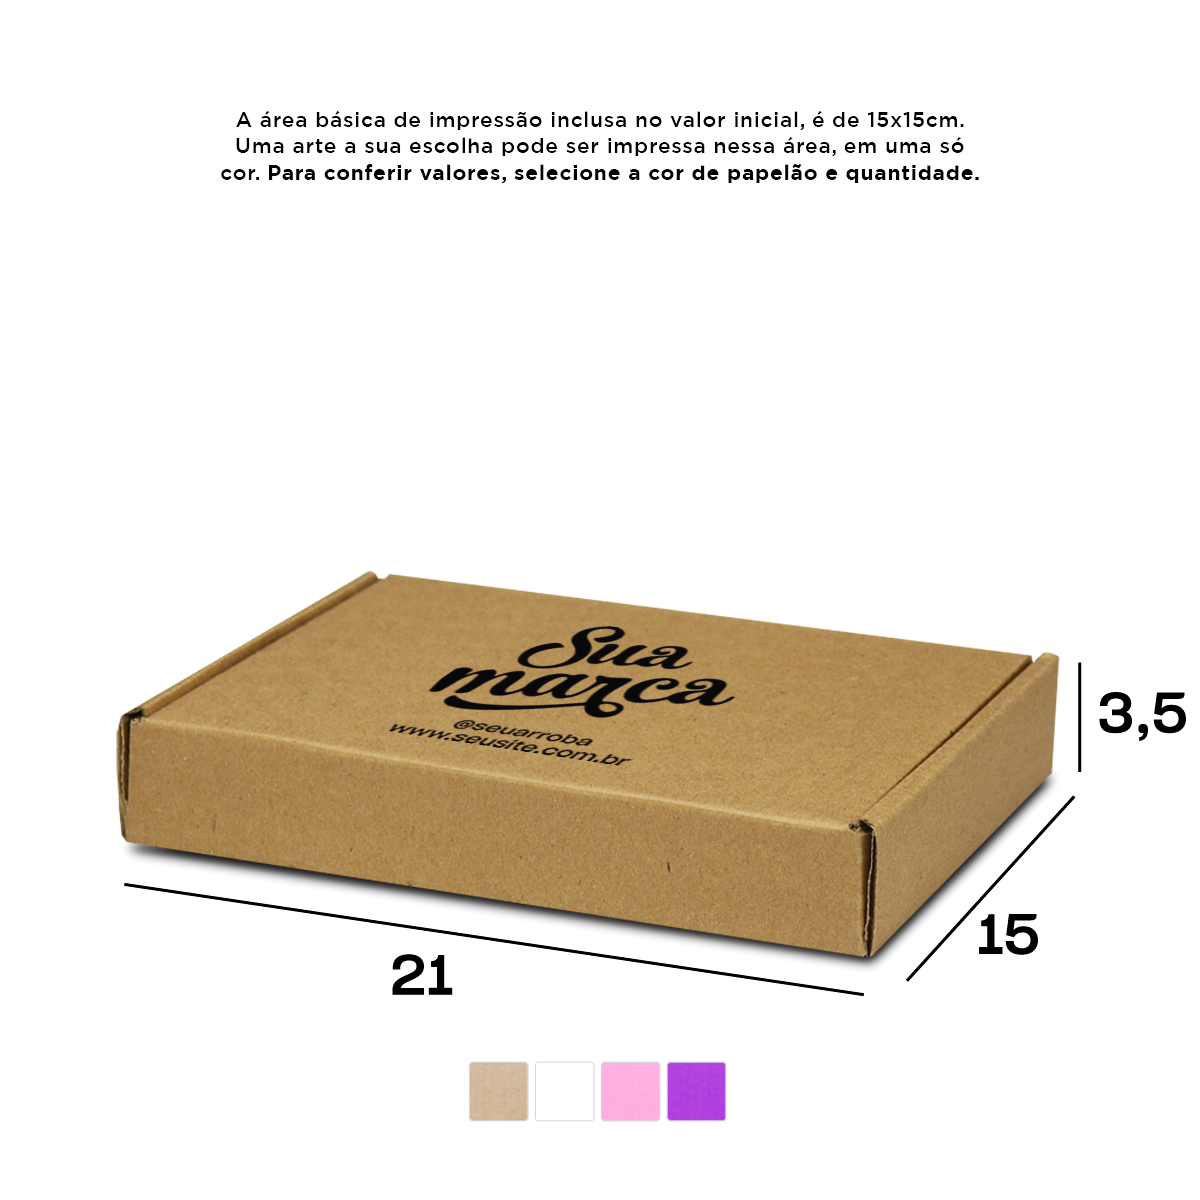 Caixa de Papelão Personalizada (21x15x3,5) Sedex 15 Mini Envios